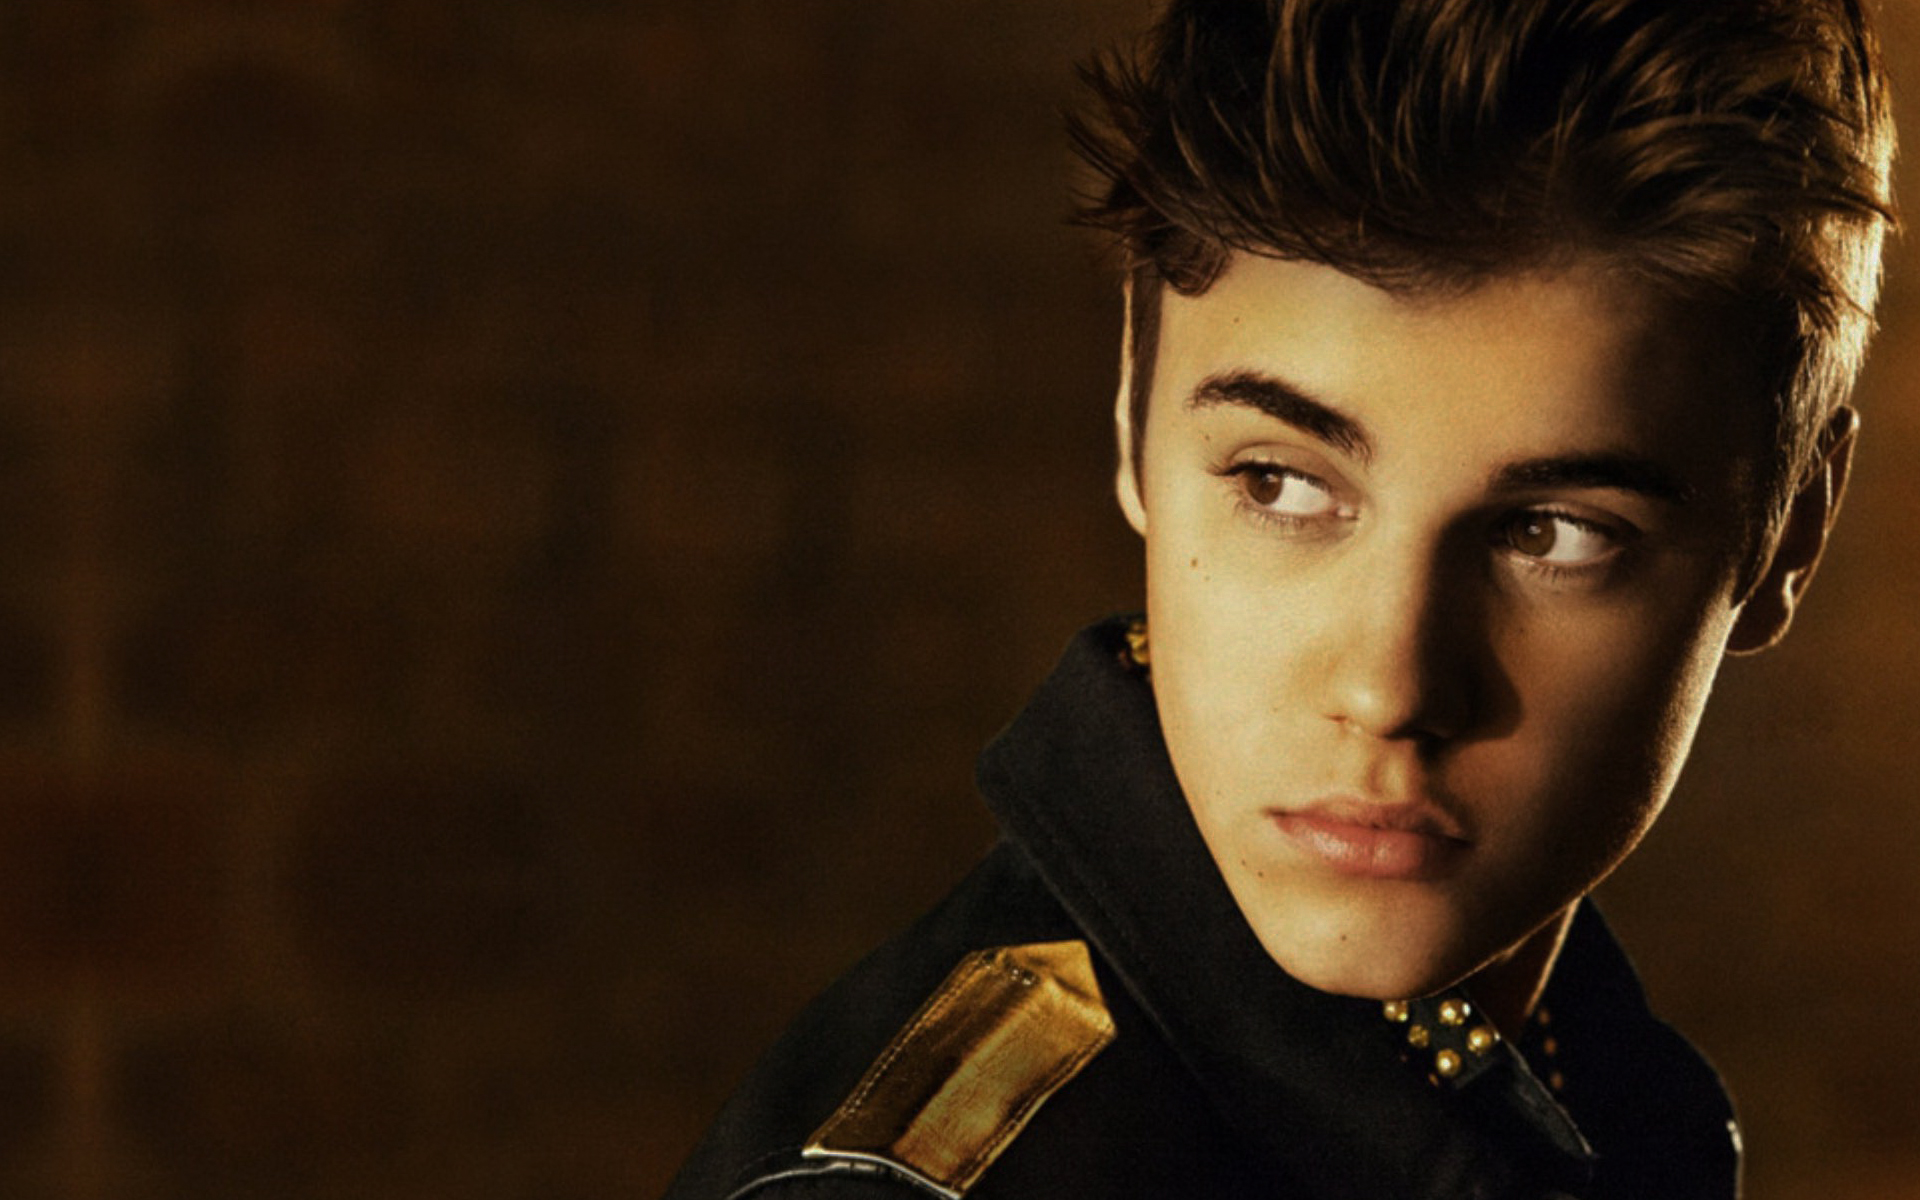 Justin Bieber HD Rap Wallpaper